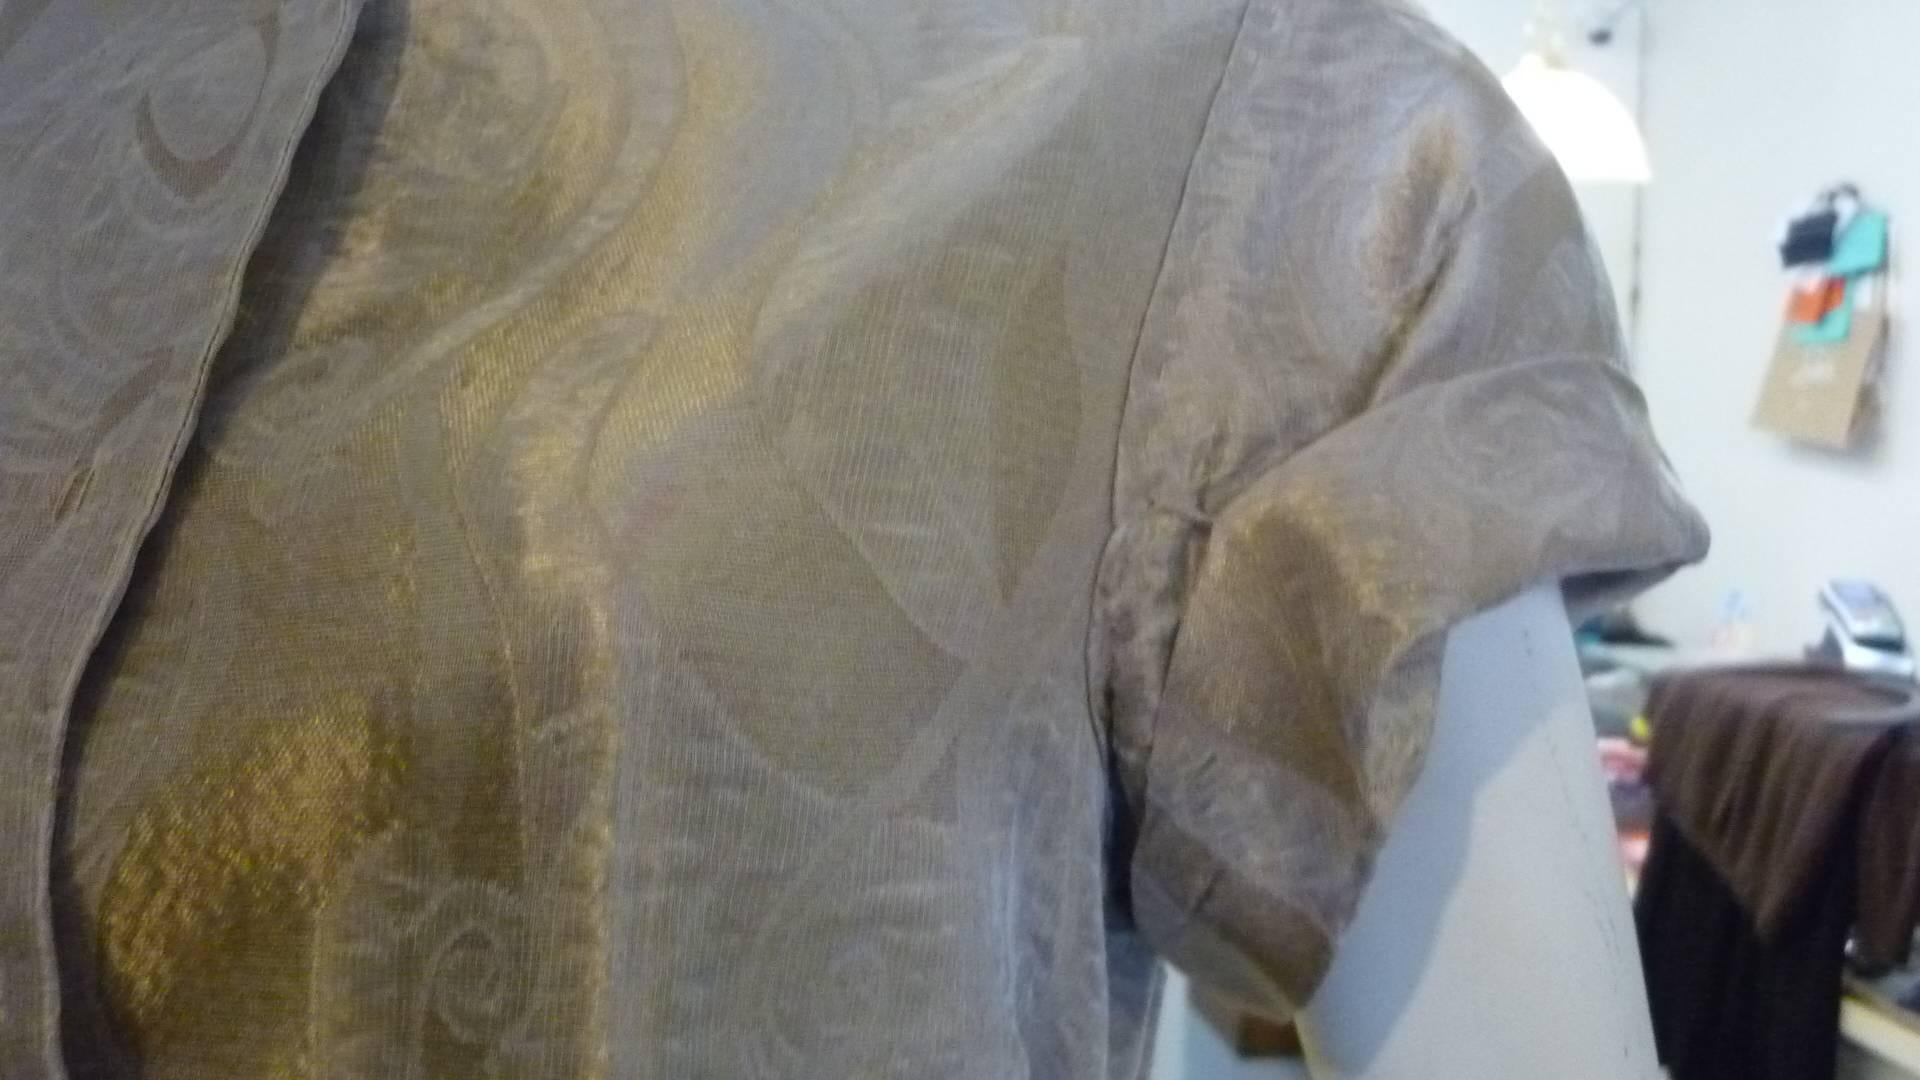 2008 S/S Alberta Ferretti Metallic Gold gemustertes Kleid (44 Itl) (Grau) im Angebot